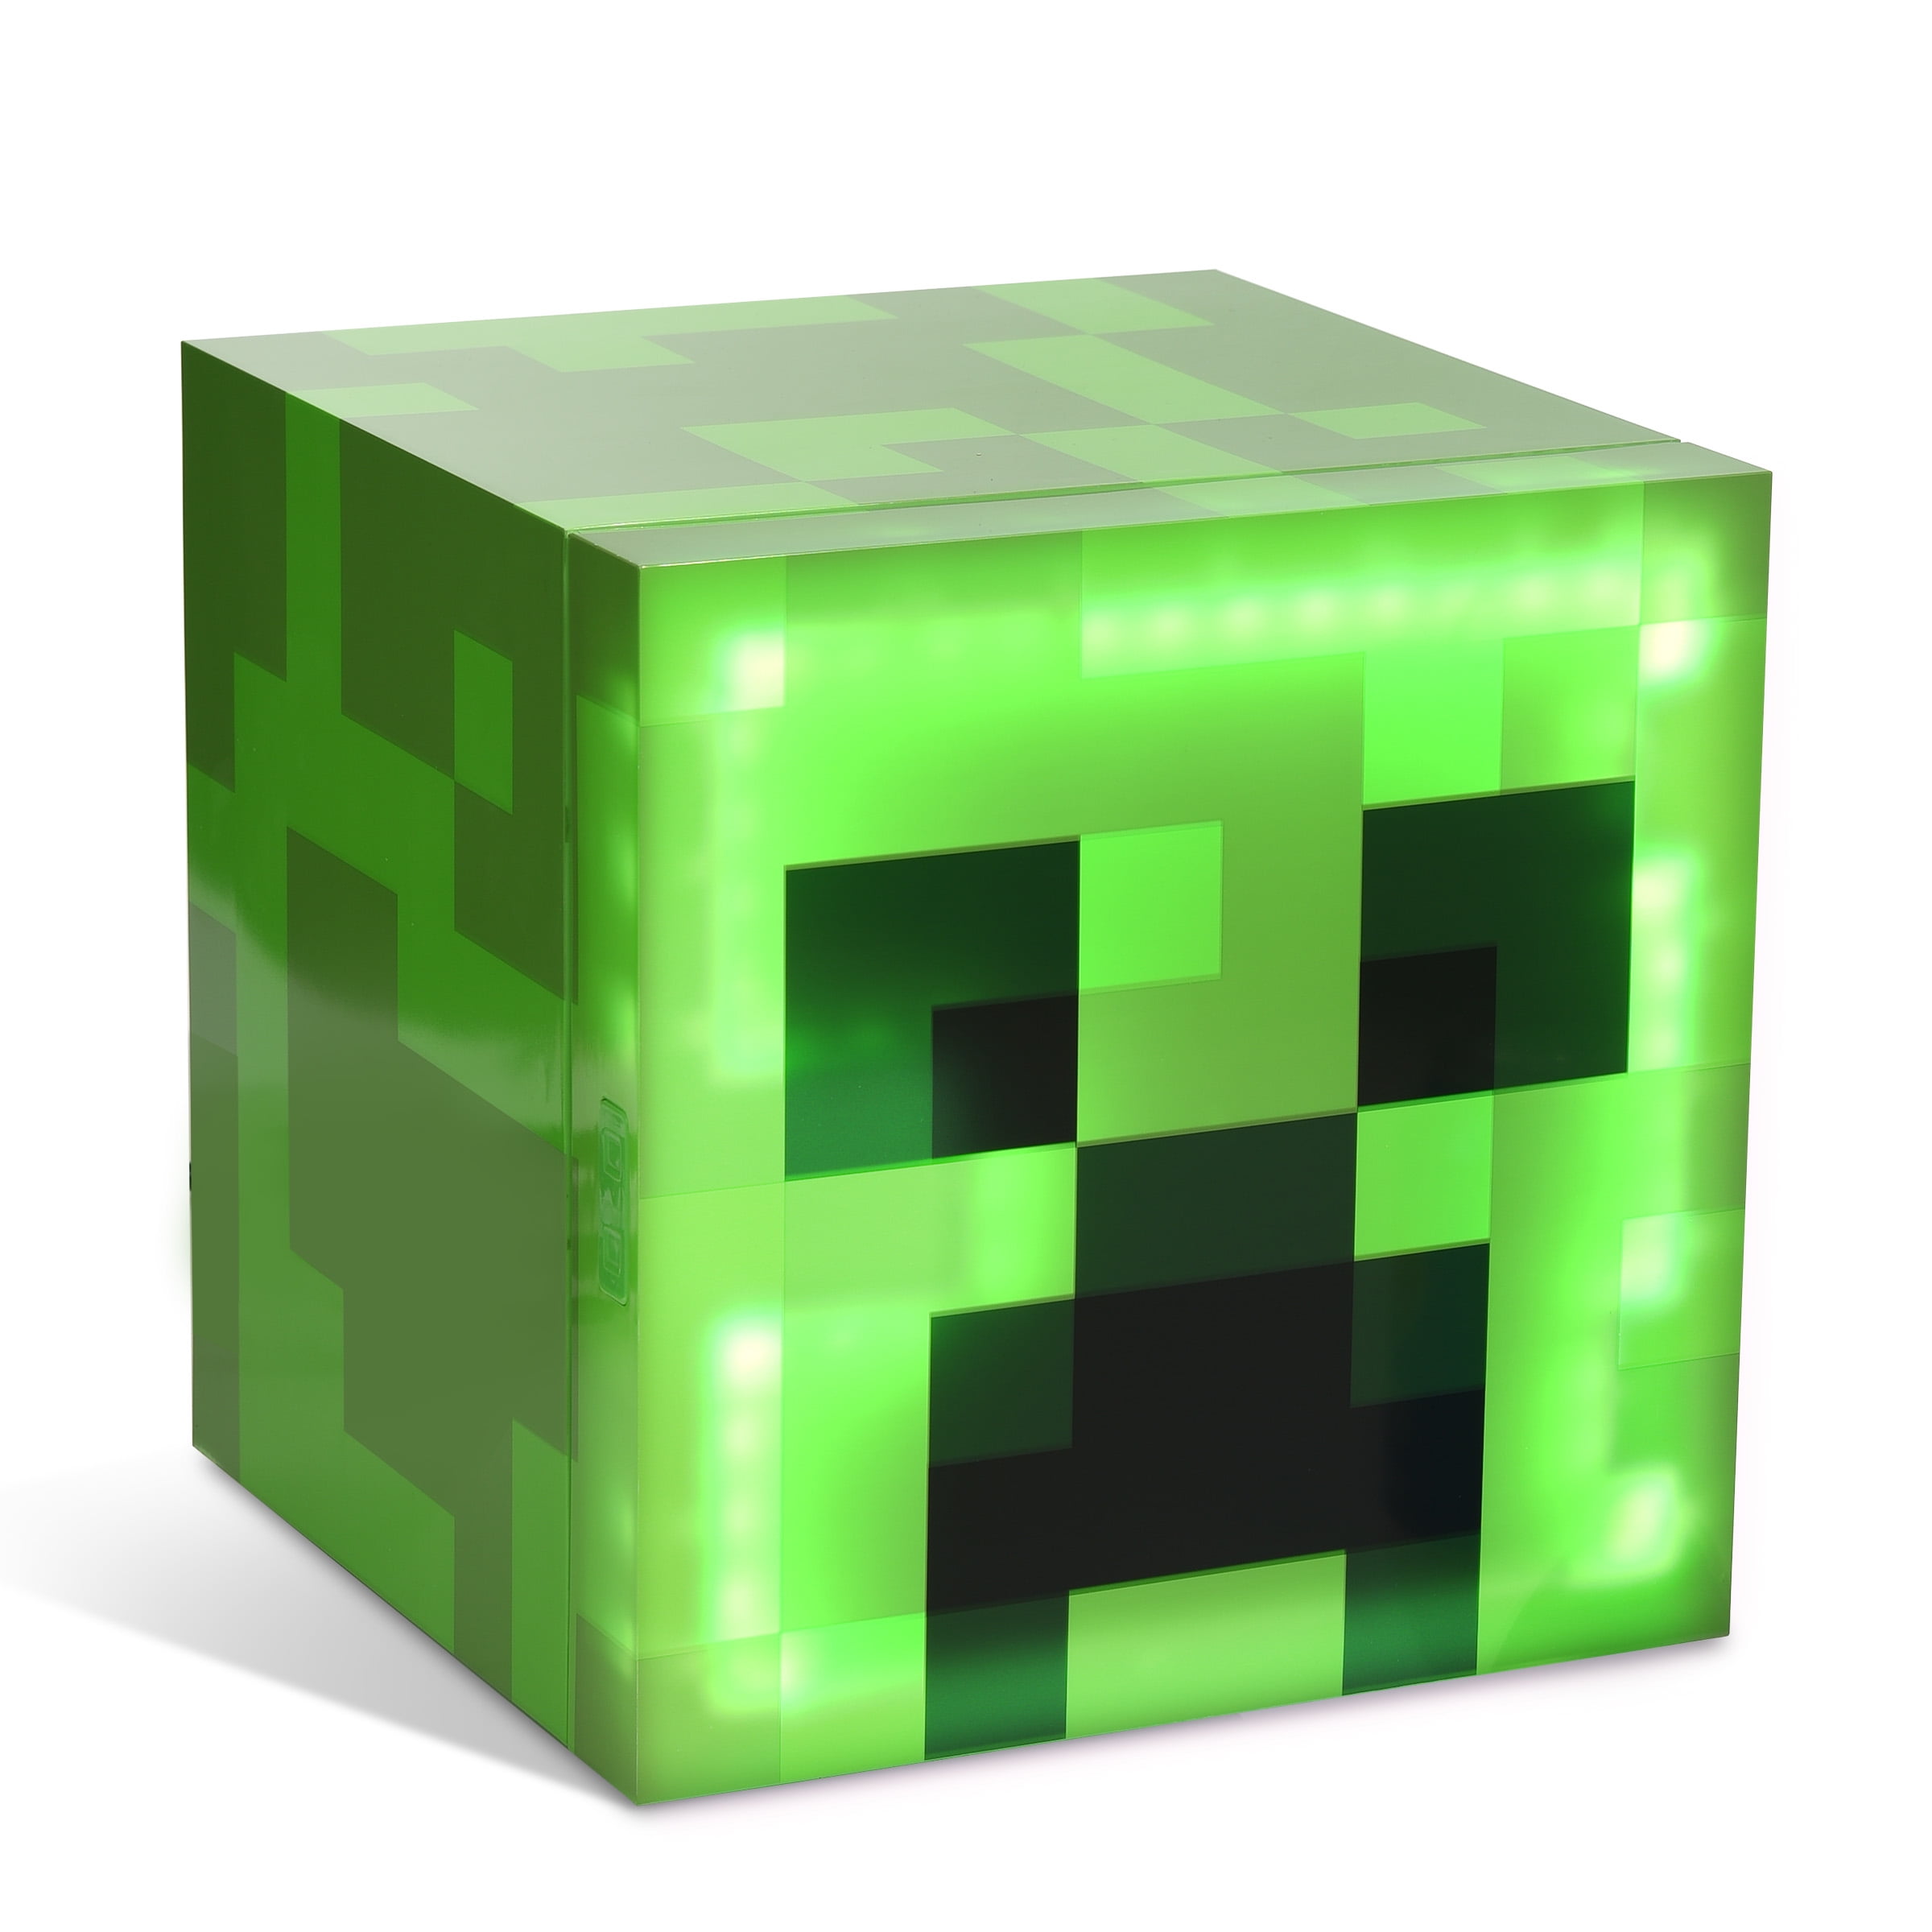 Minecraft Green Creeper Body 12 Can Mini Fridge, 8L 2 Door Fridge with Ambient Lighting, Measures 25.2 x 9.5 x 9.1 D, Includes JDS Drink Carrying